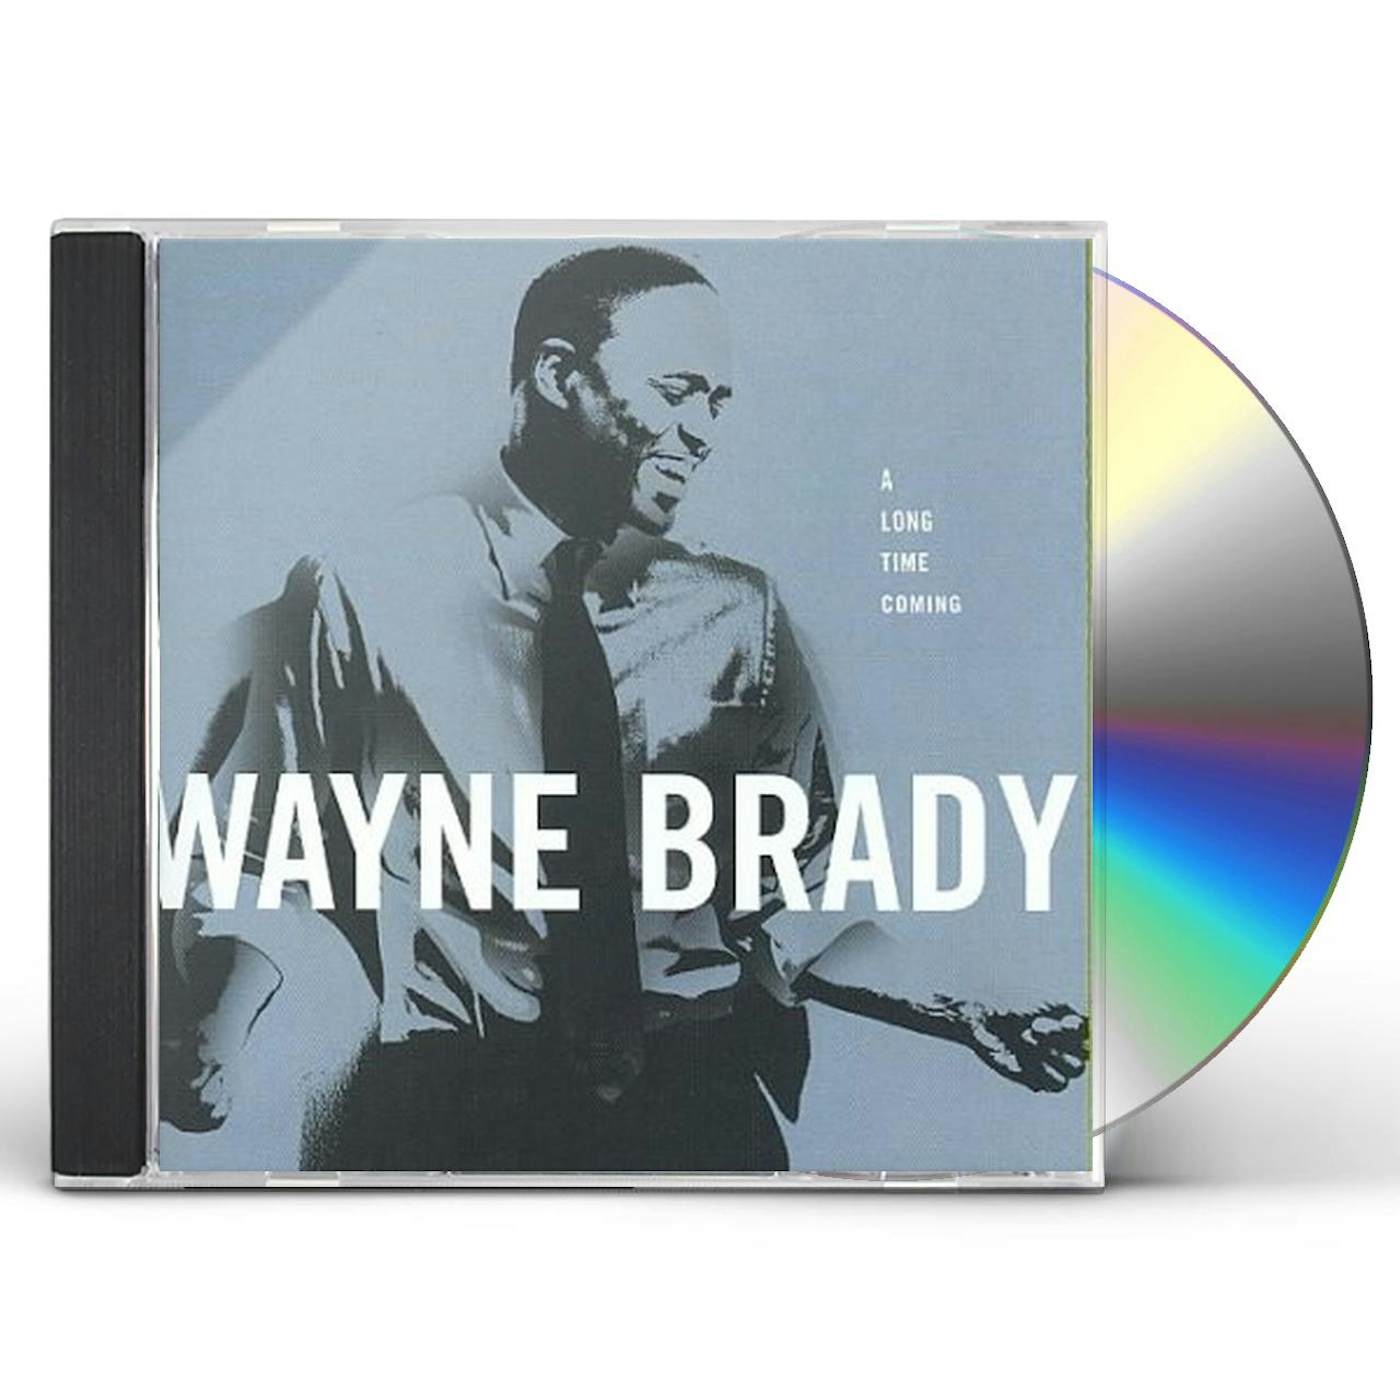 Wayne Brady LONG TIME COMING CD